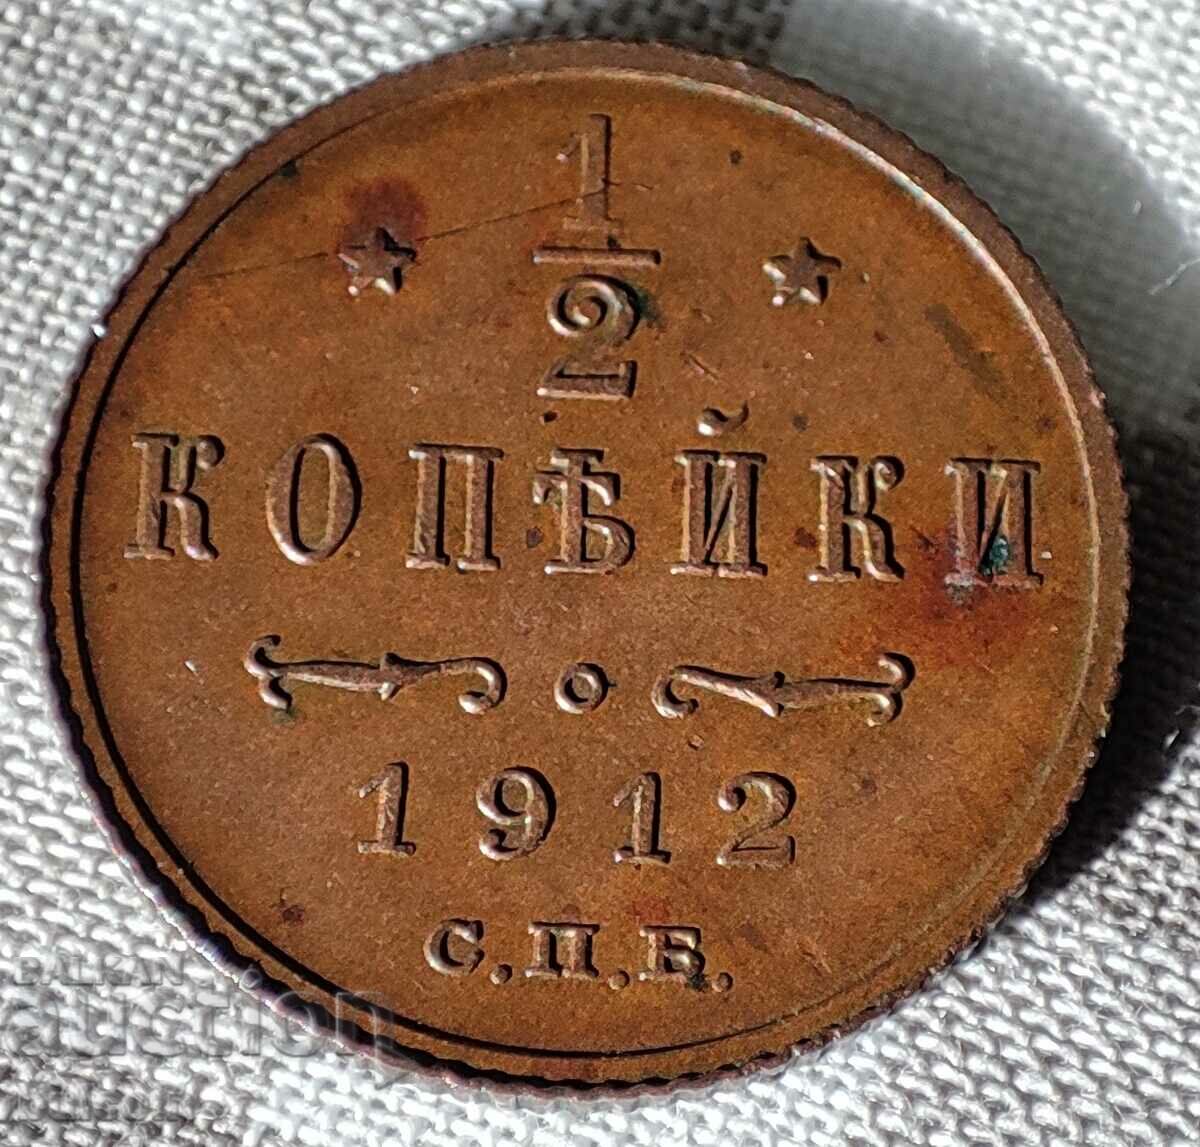 RUSSIA 1/2 KOPEIKI 1912 S.P.B / EMPEROR NICHOLAS II XF